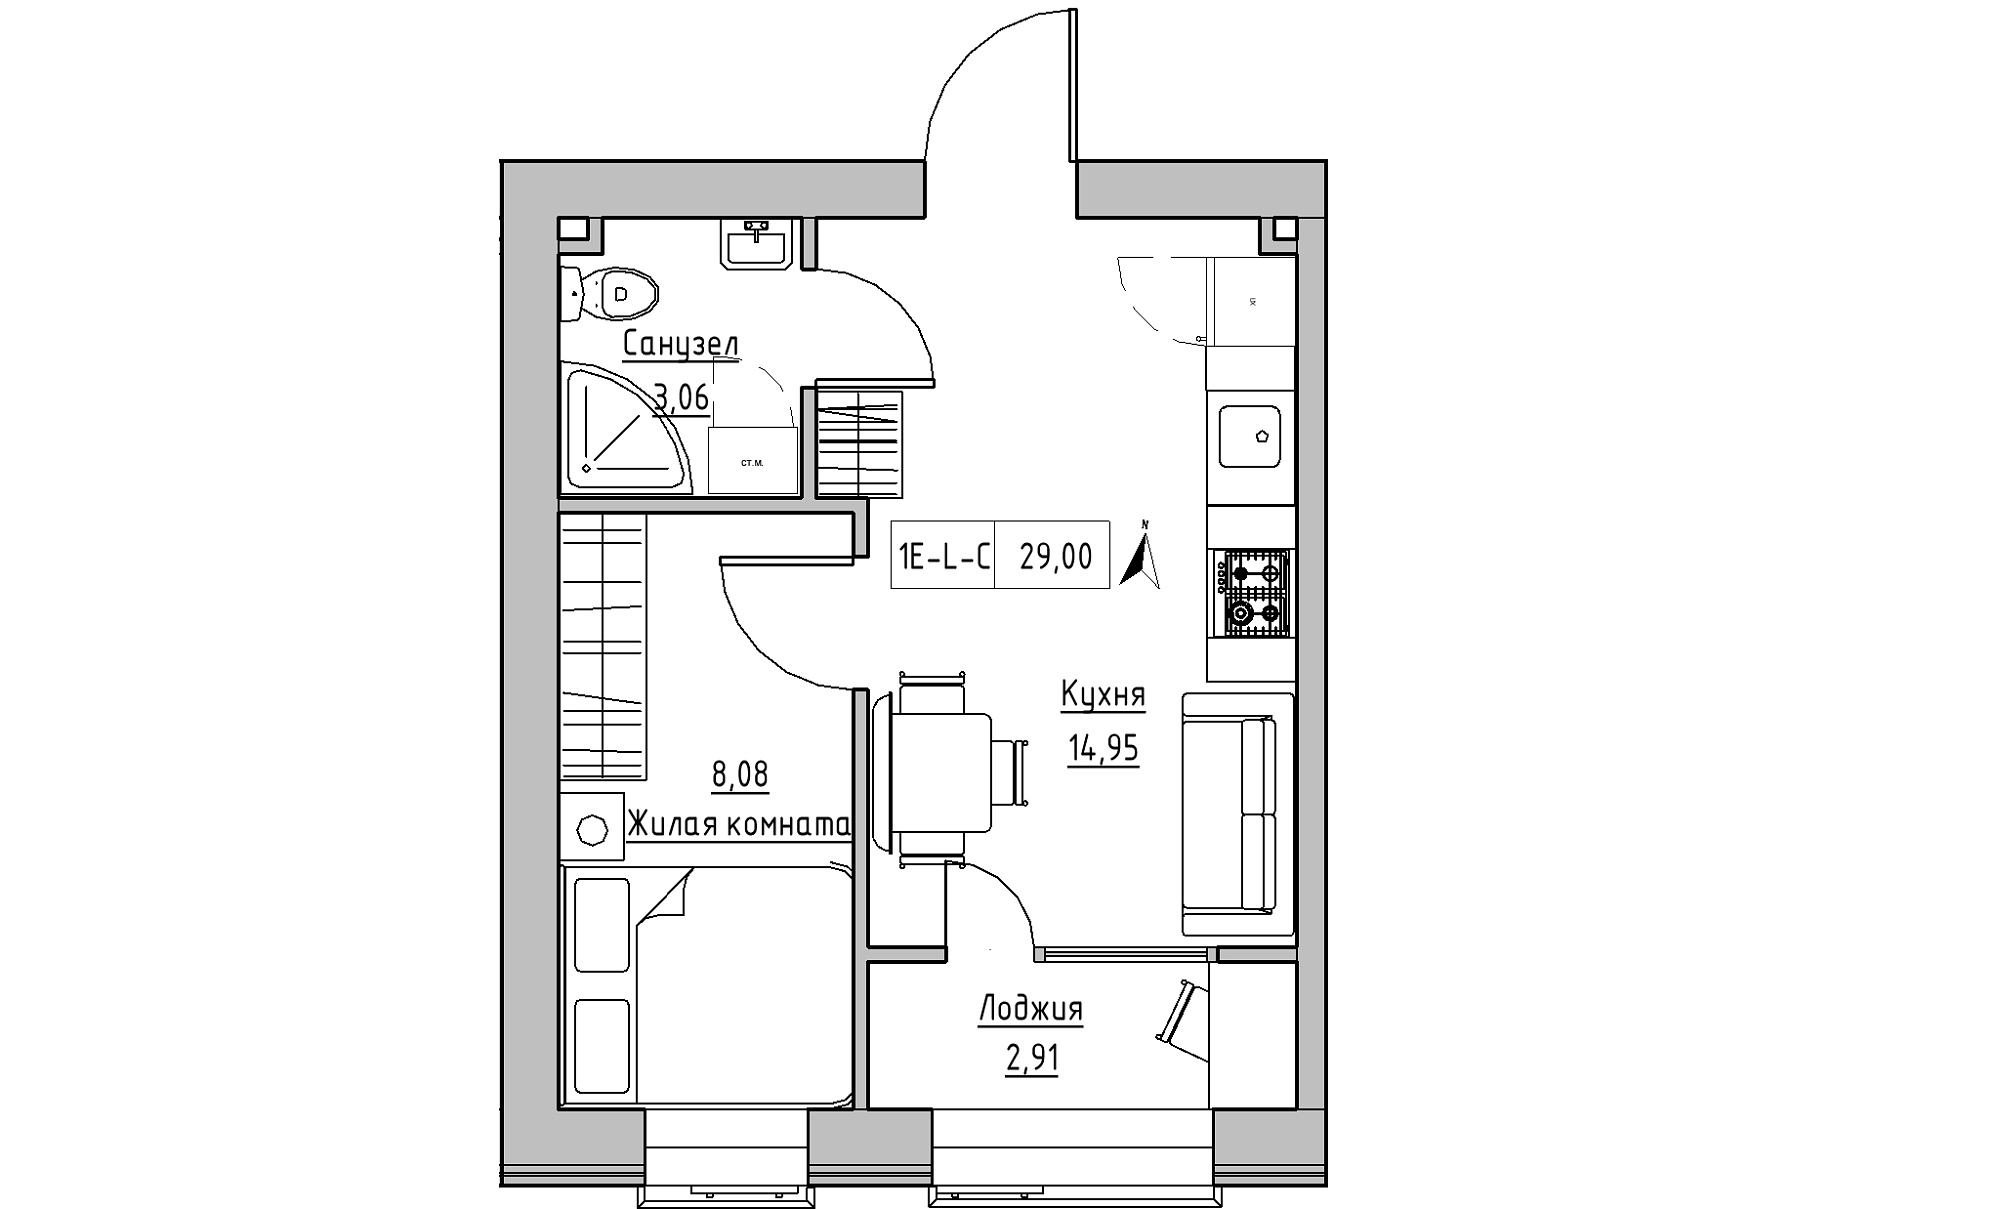 Planning 1-rm flats area 29m2, KS-016-02/0007.